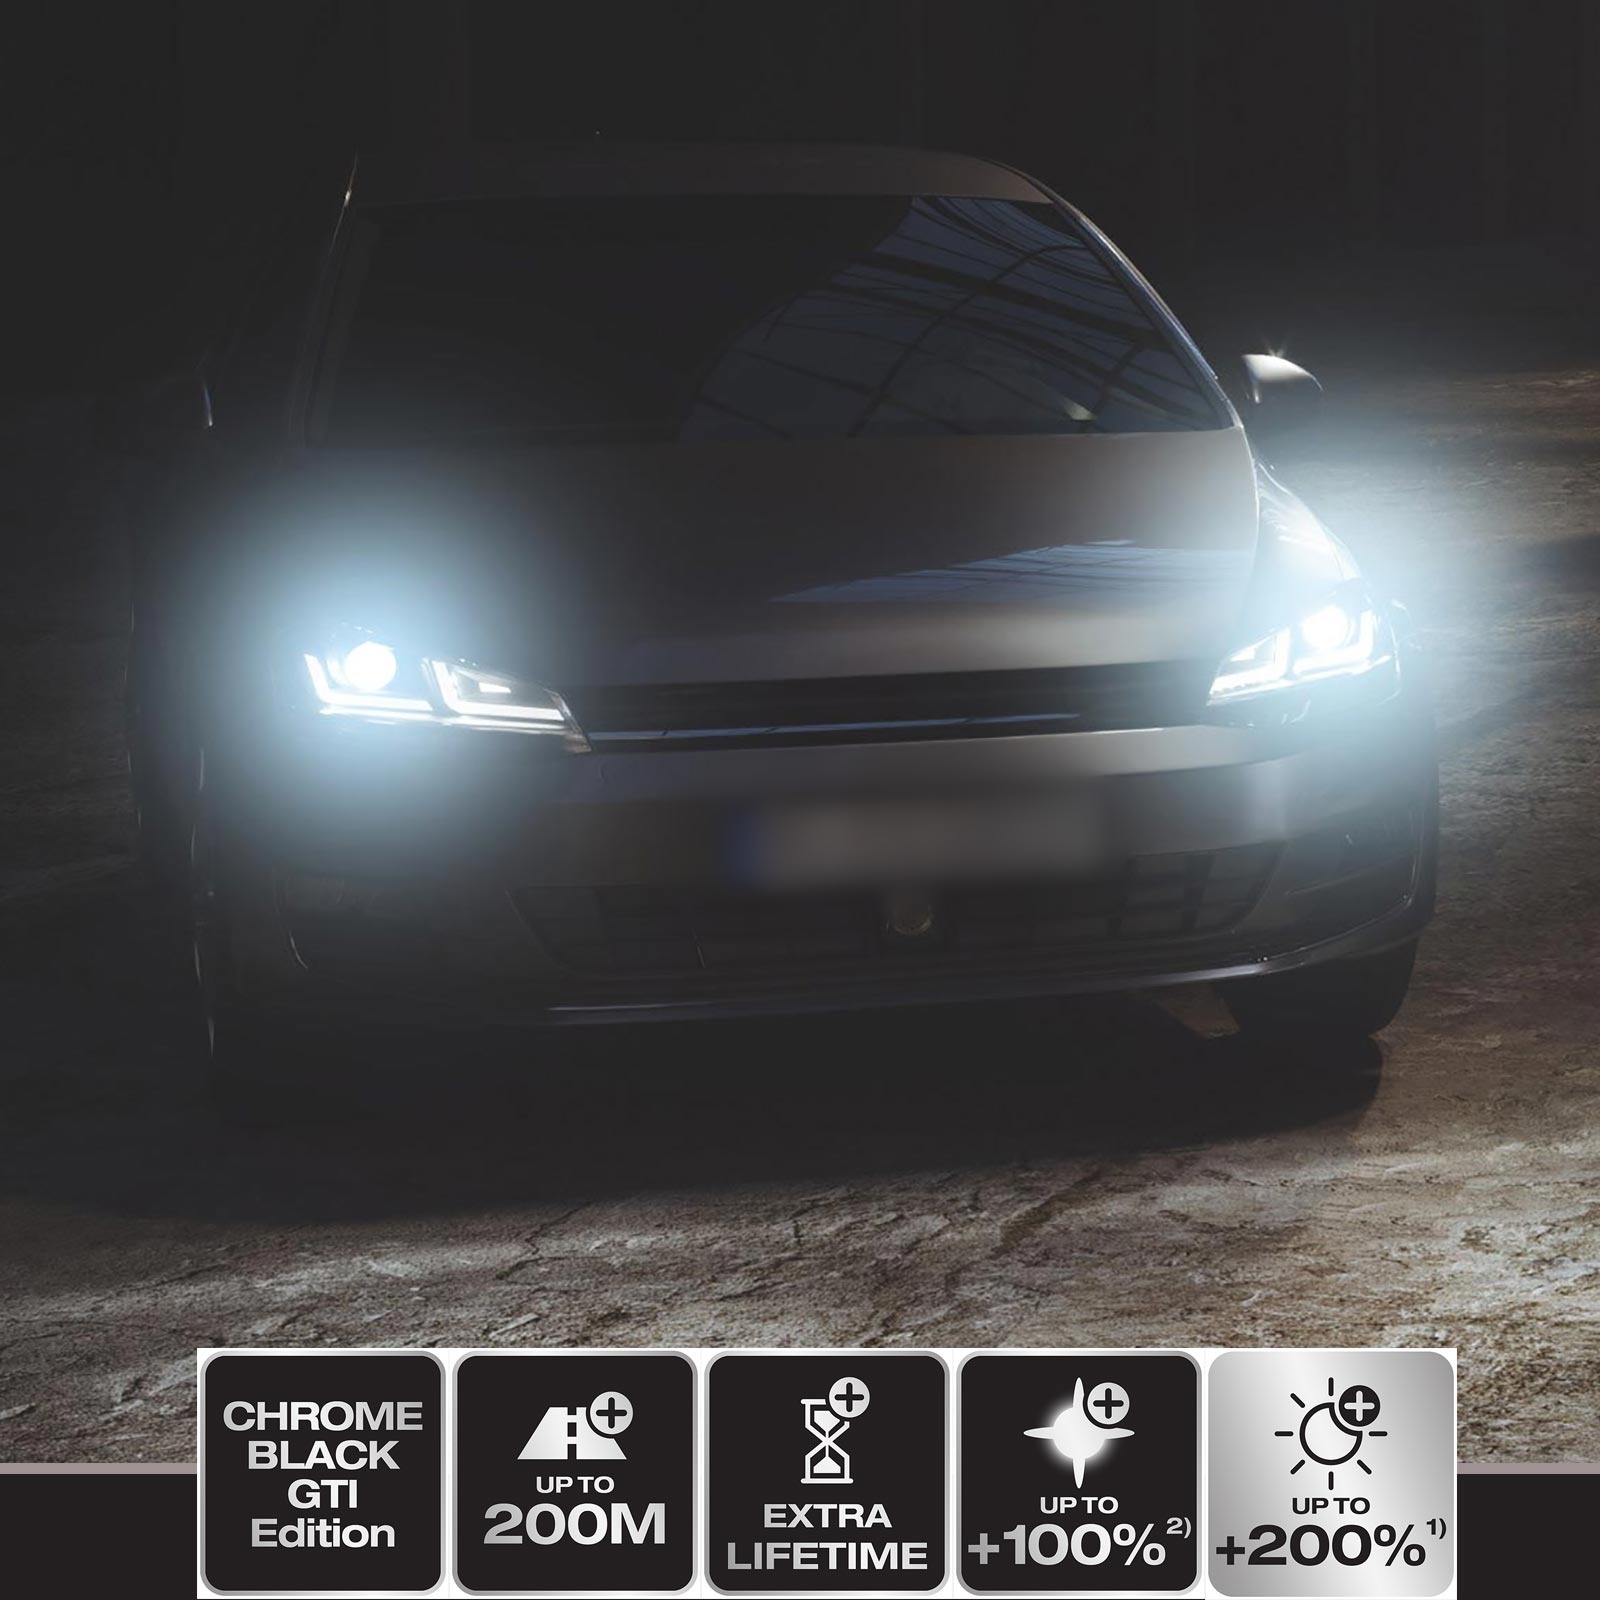 OSRAM LEDriving Scheinwerfer für VW GOLF 7.5 - GTI EDITION